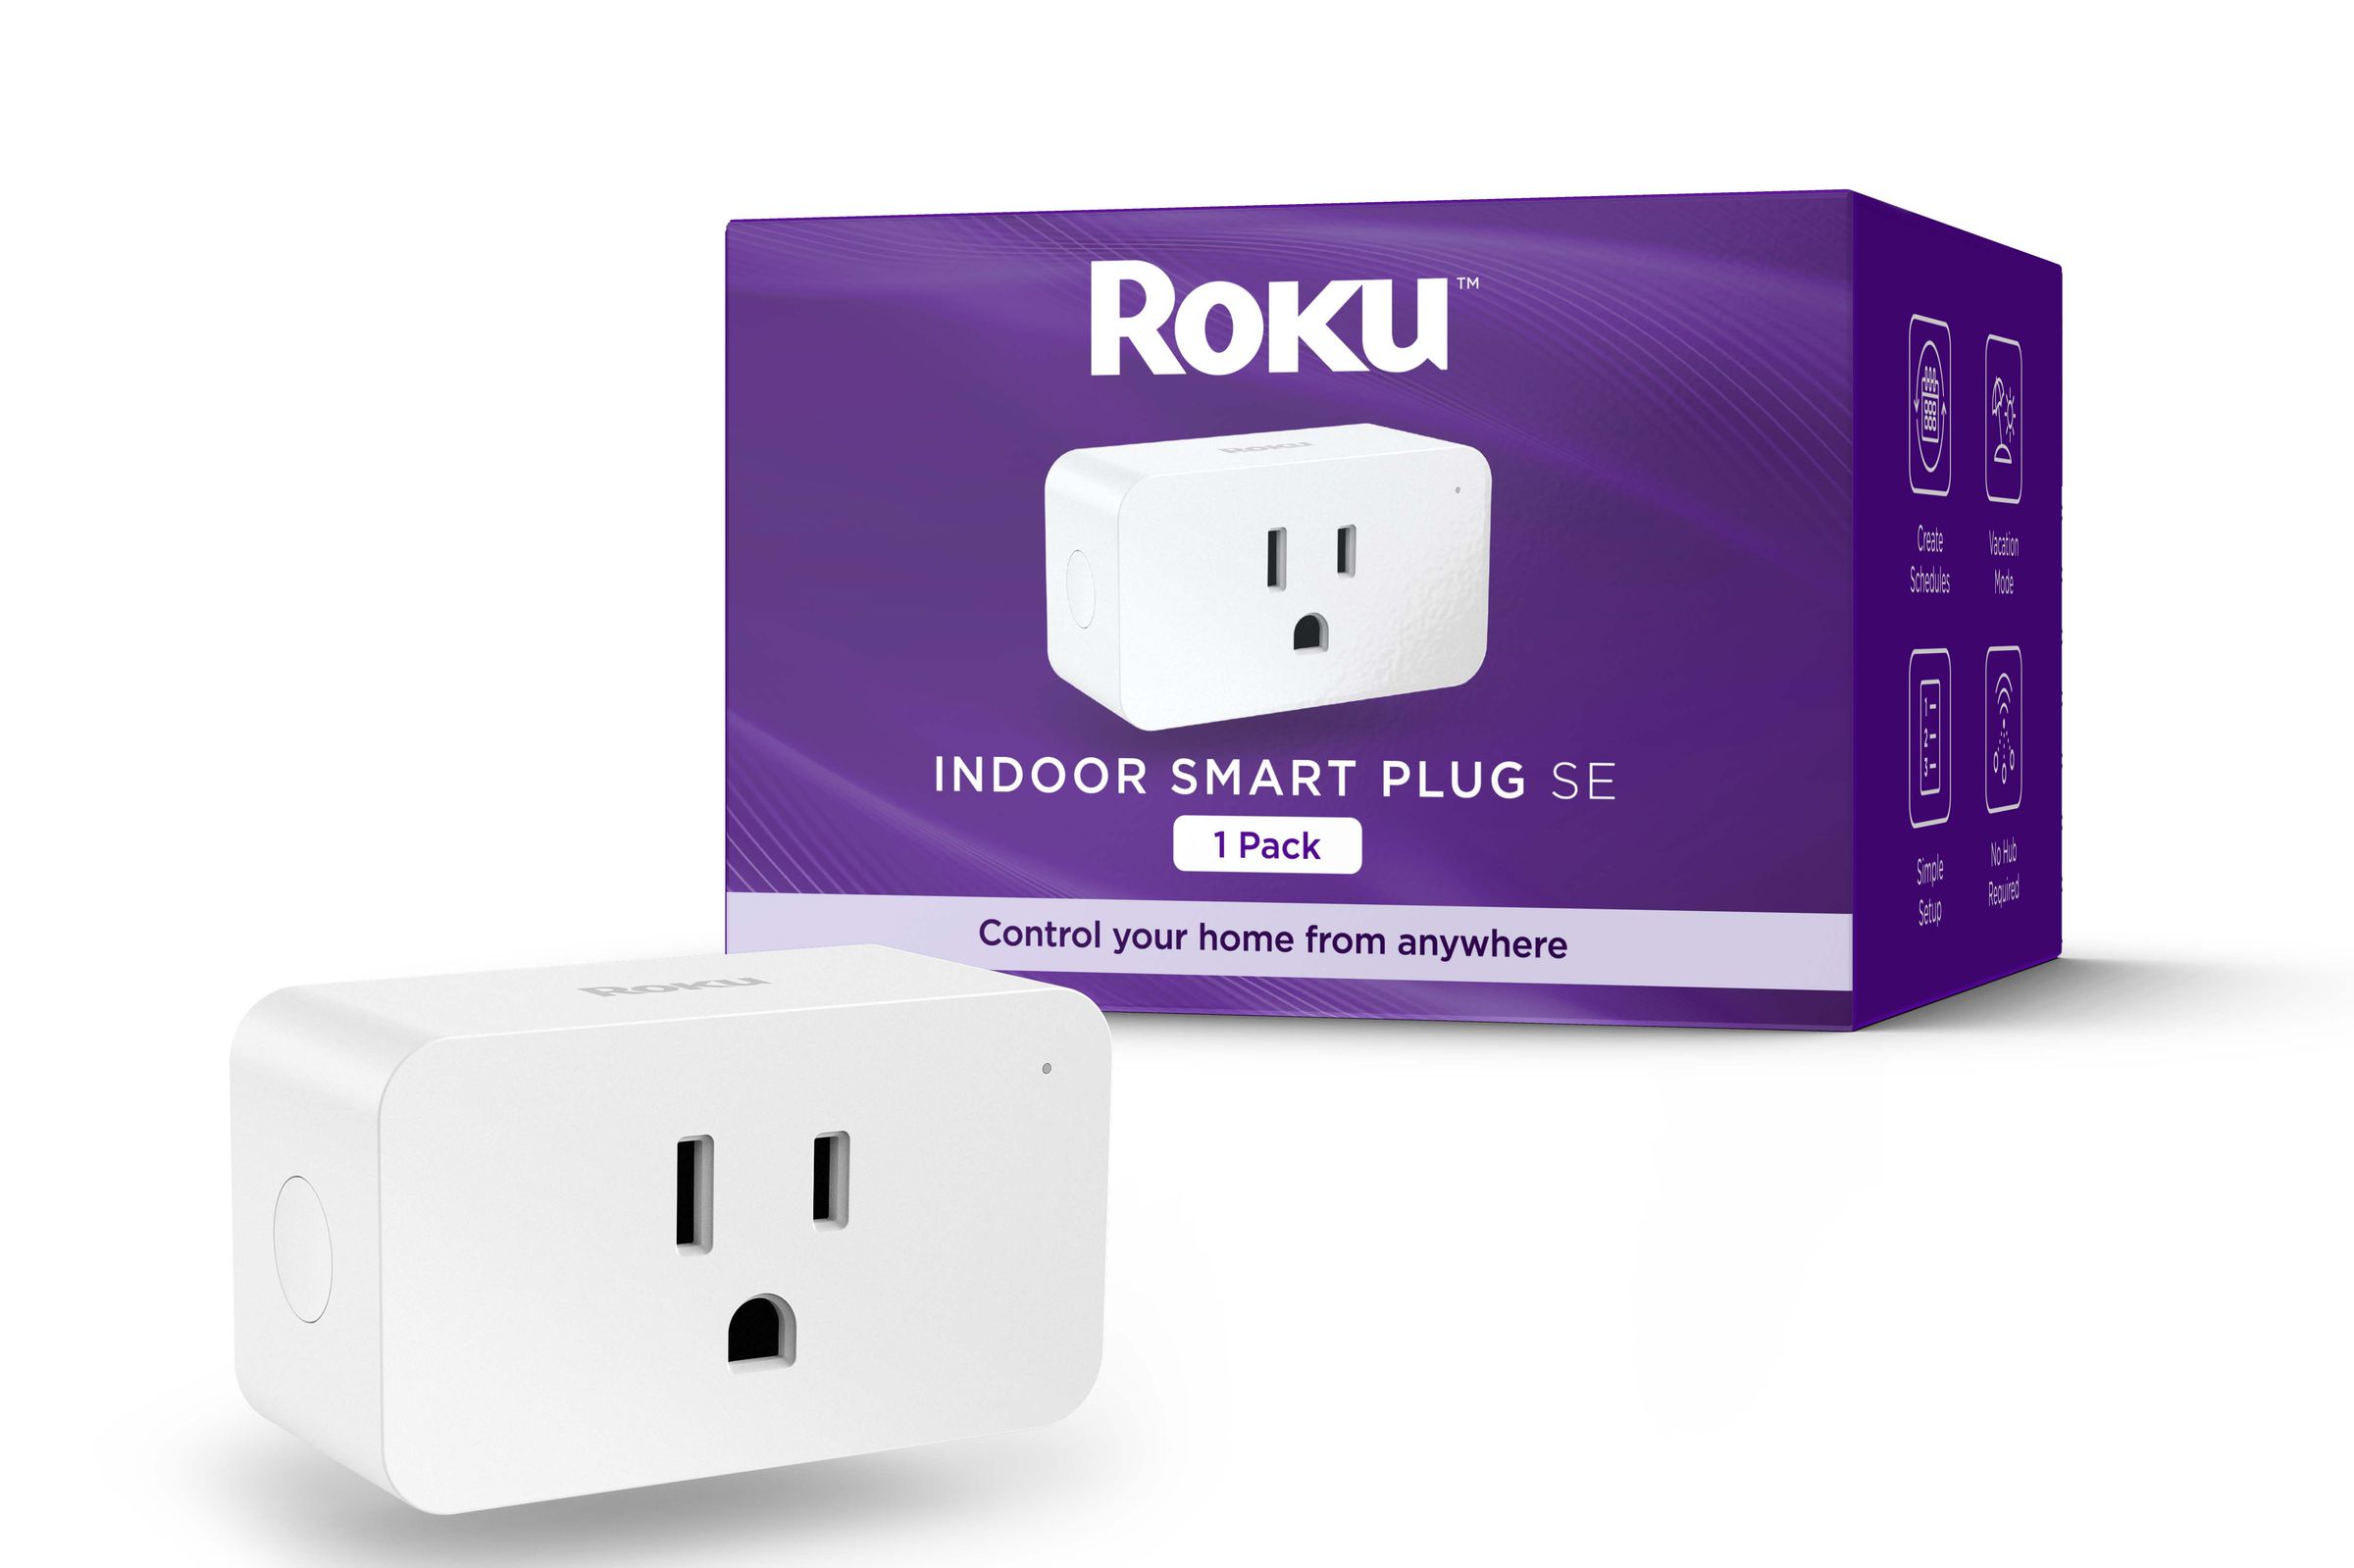 Roku Indoor Smart Plug